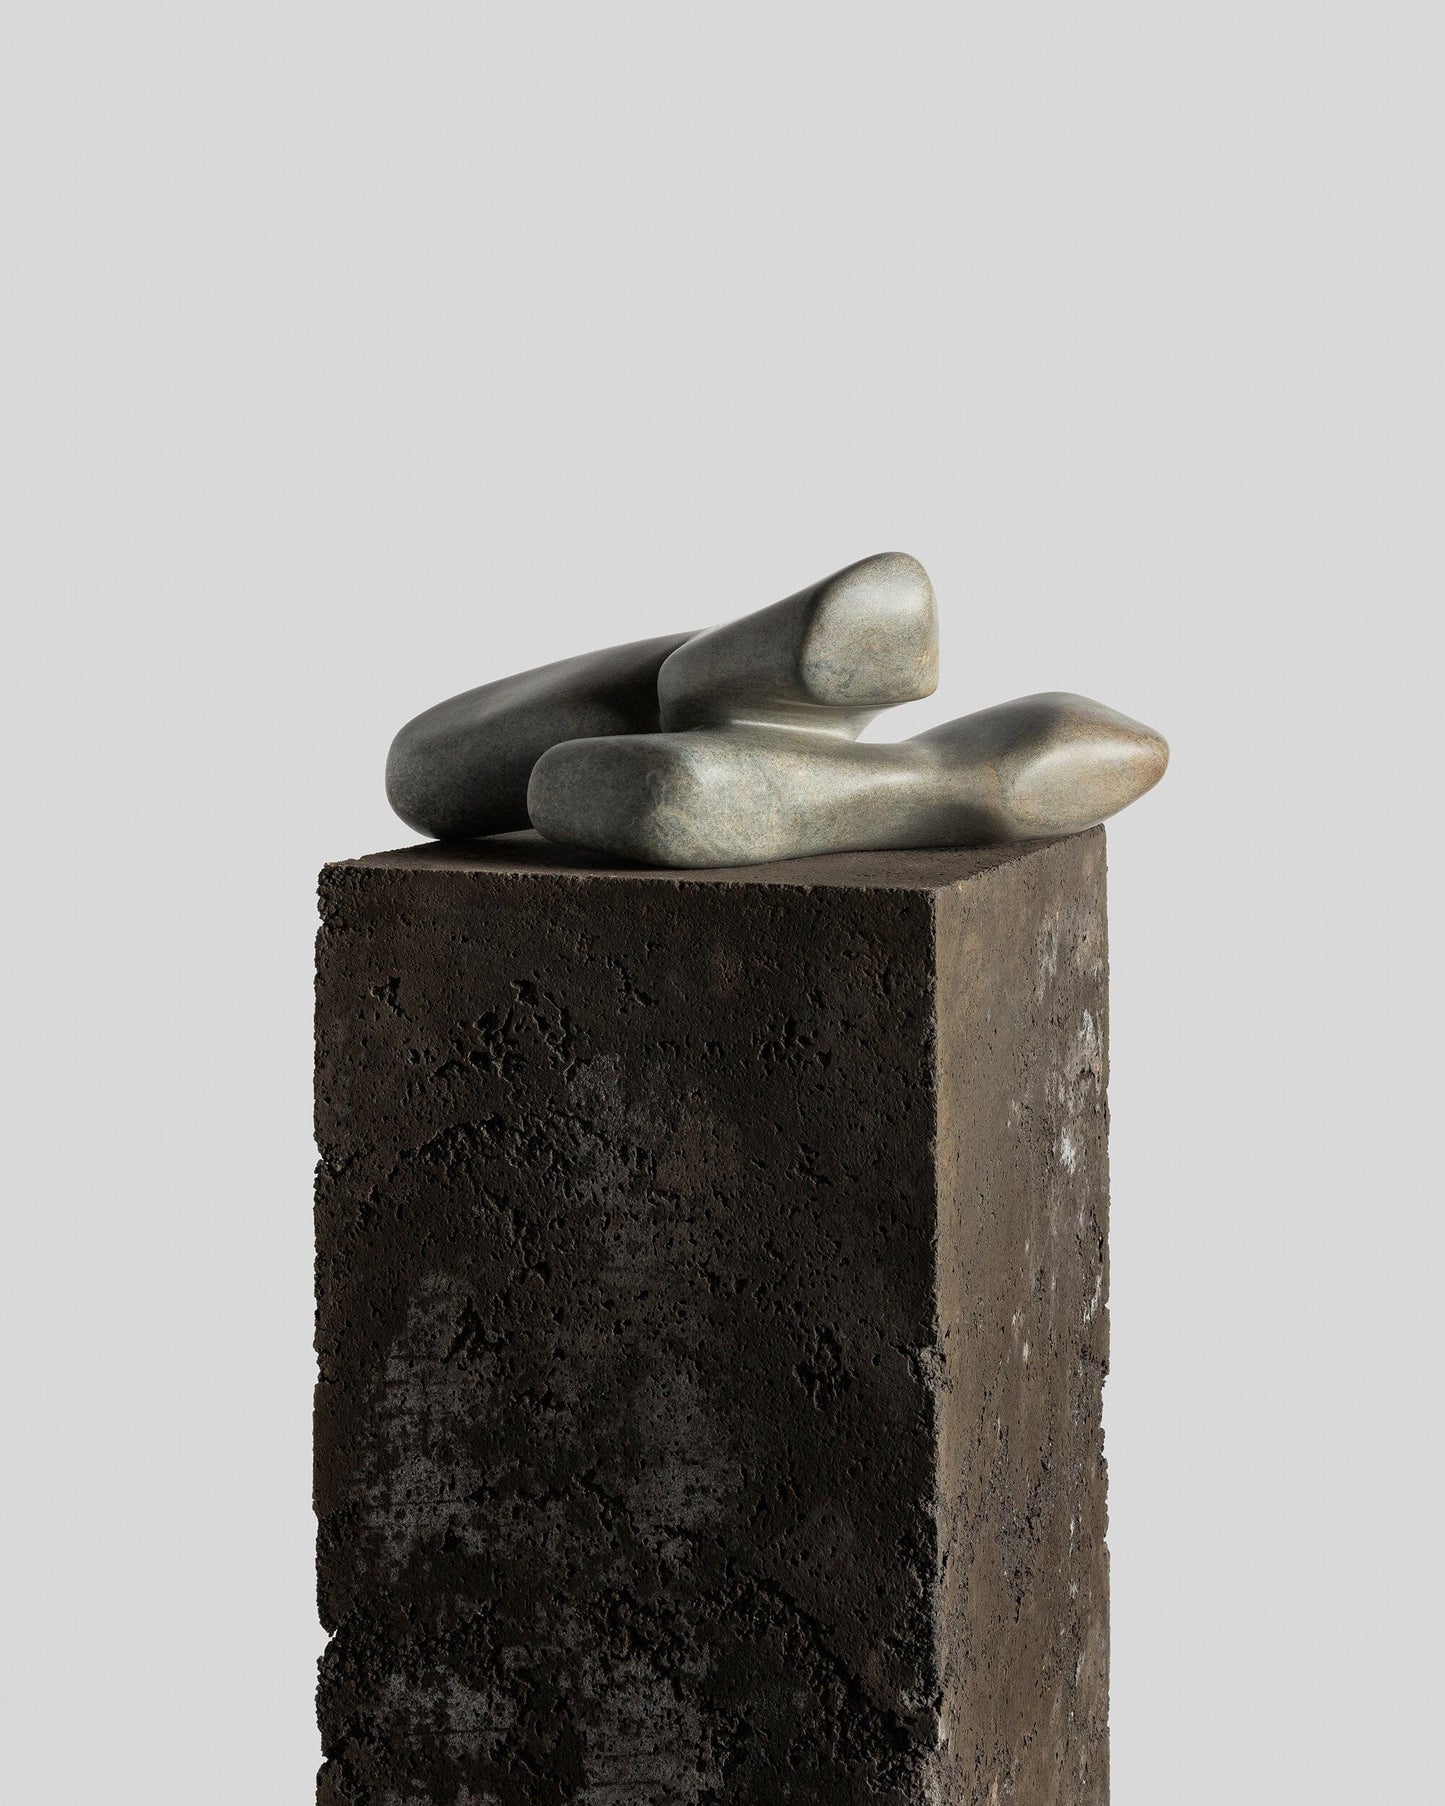 Dual Form III Sculpture by Lisa Dengler